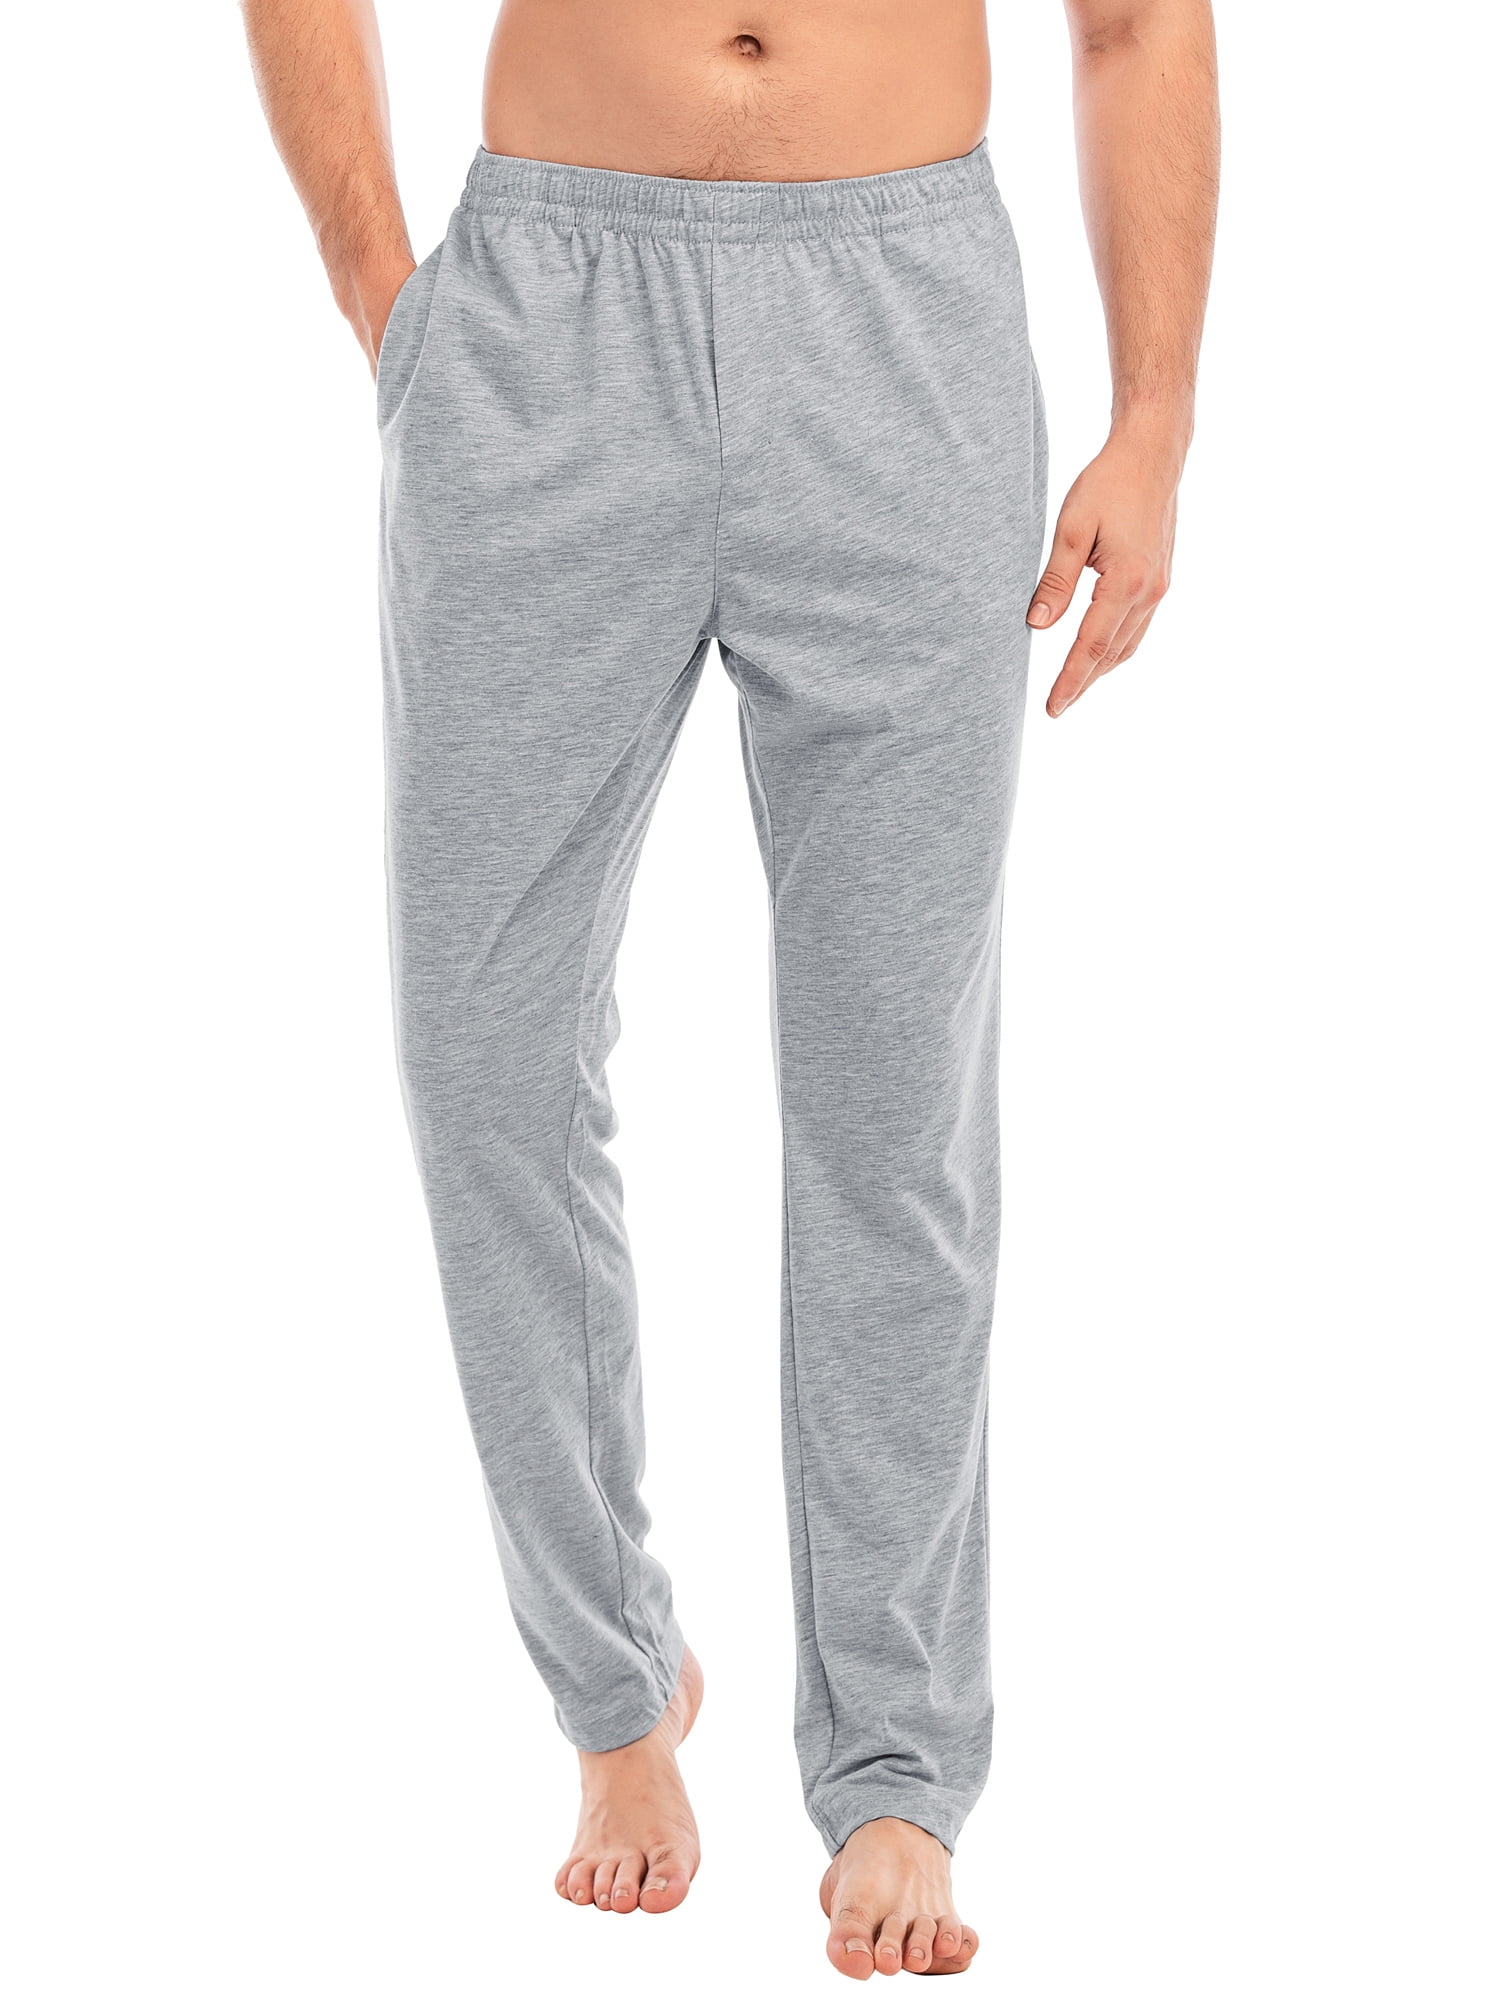 Men's Pyjama Shorts Bottoms Cotton Pajama Sleepwear Nightwear Lounge Wear Shorts Casual Jogging Sport Gym Pants with Pockets for Summer 